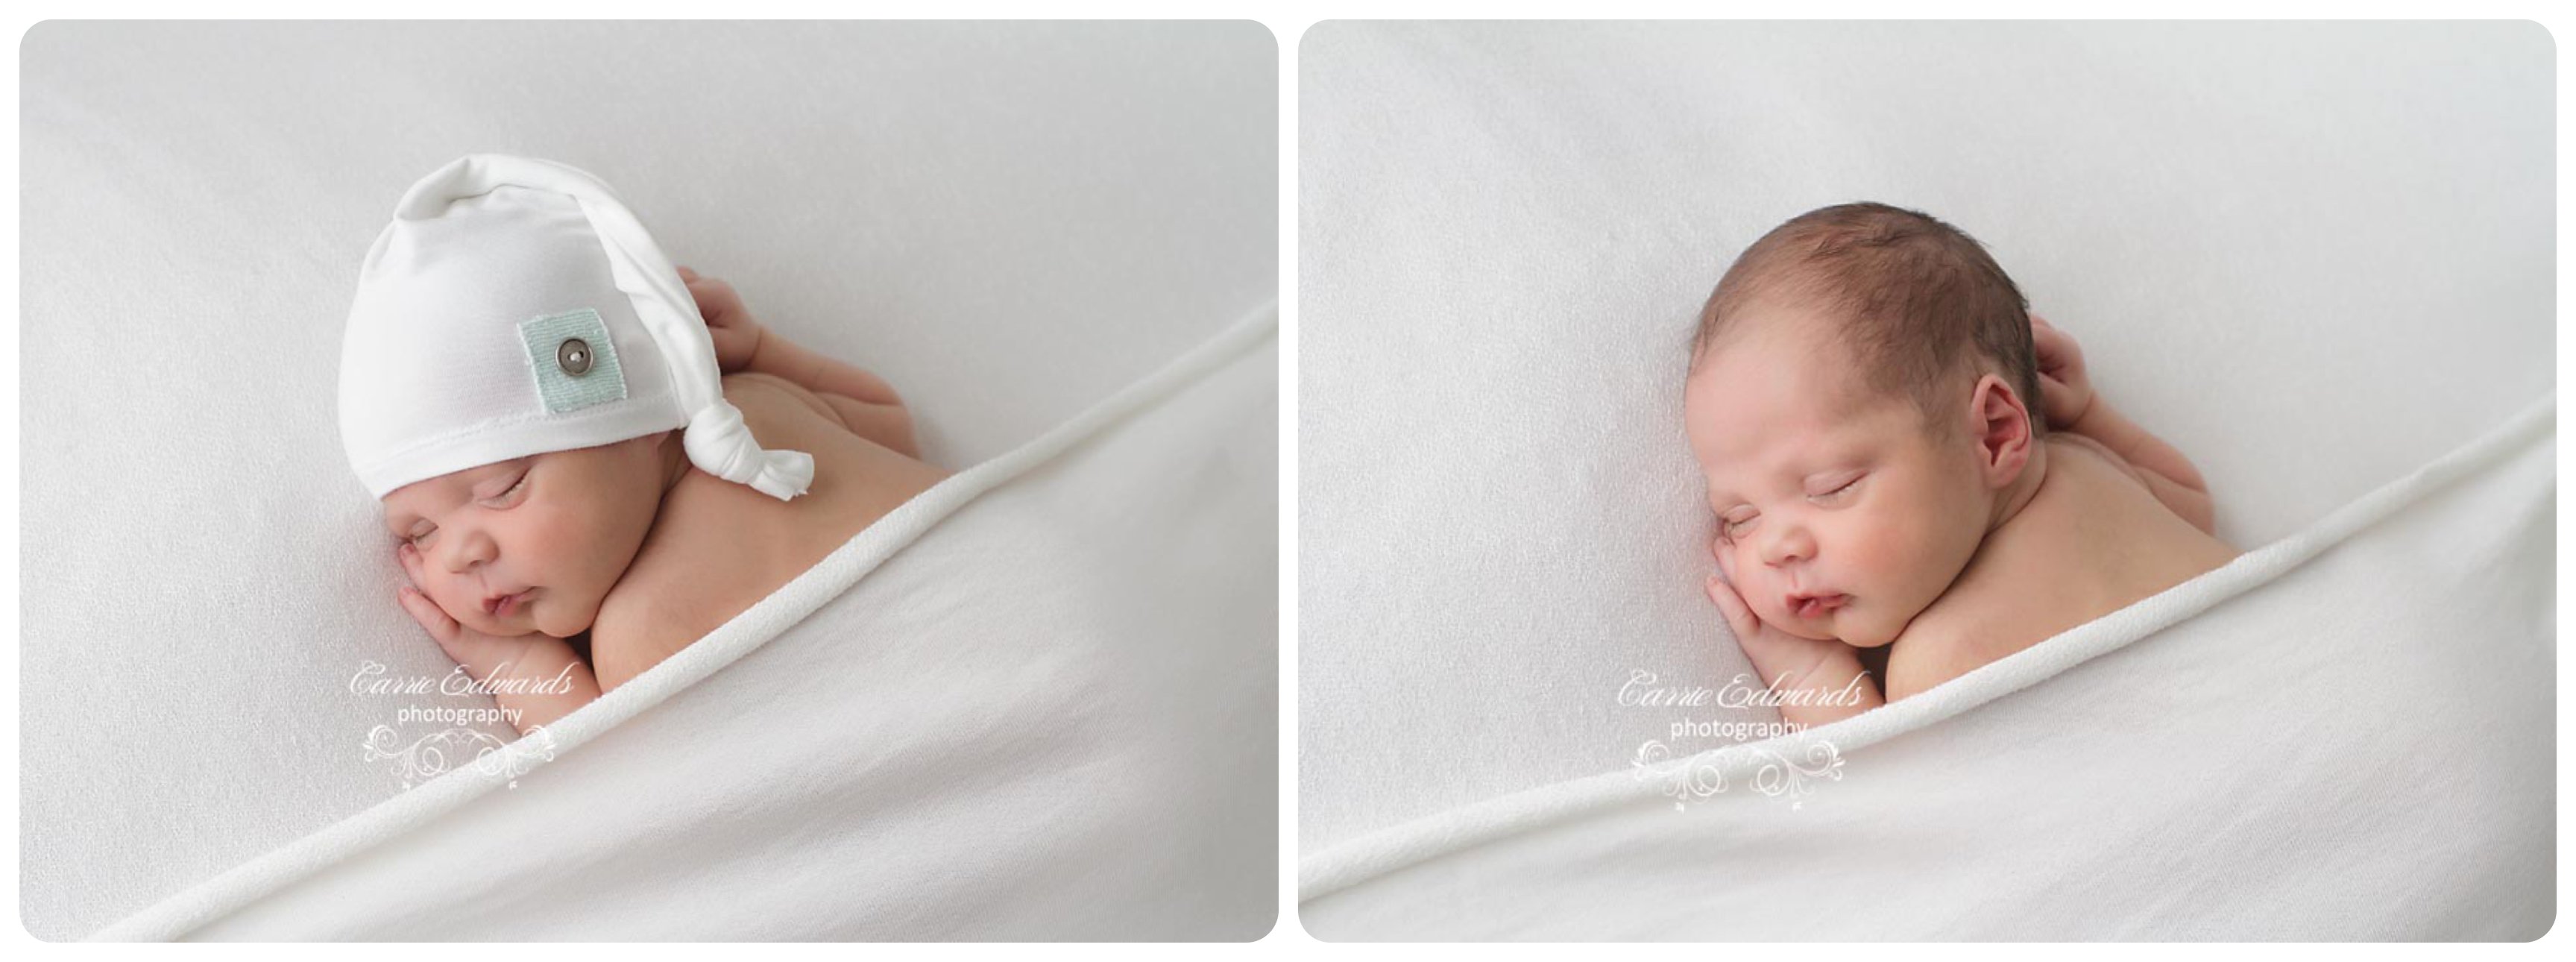 evergreen-newborn-photographer-baby-pictures-infant-infant-pictures-newborn-pictures-baby-photos-newborn-photographer